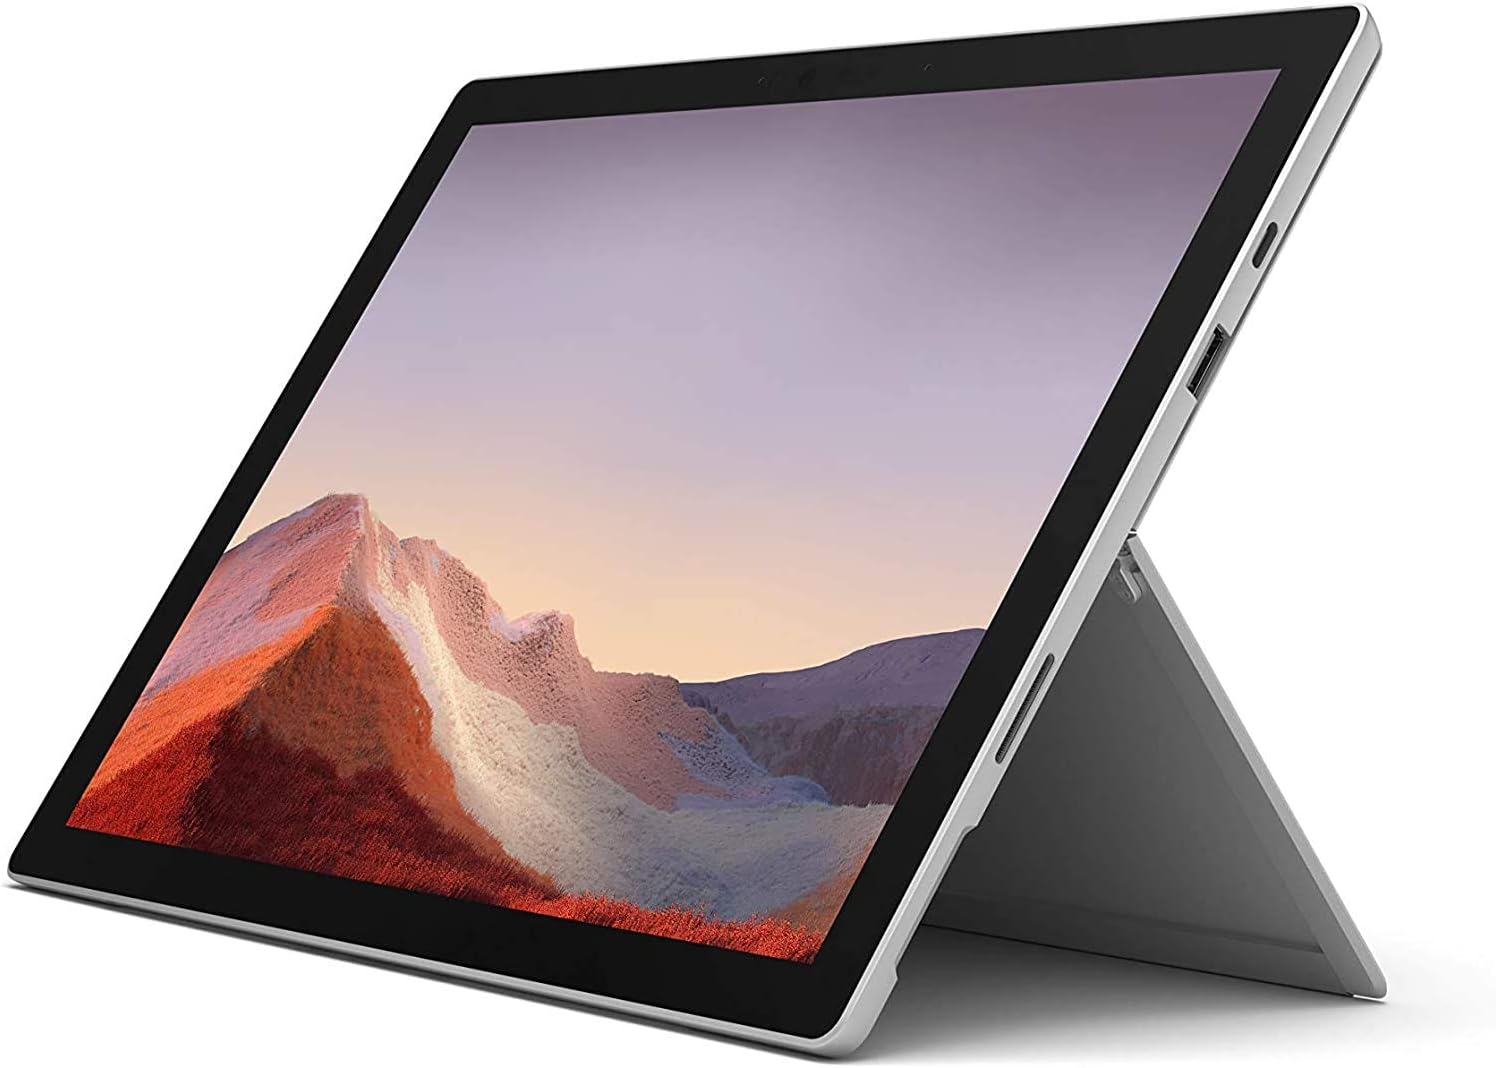 Microsoft Surface Pro 7 Quad-Core i5-1035G4 256 GB 8 GB RAM Wi-Fi Windows 10 Pro (platino, versión más reciente)